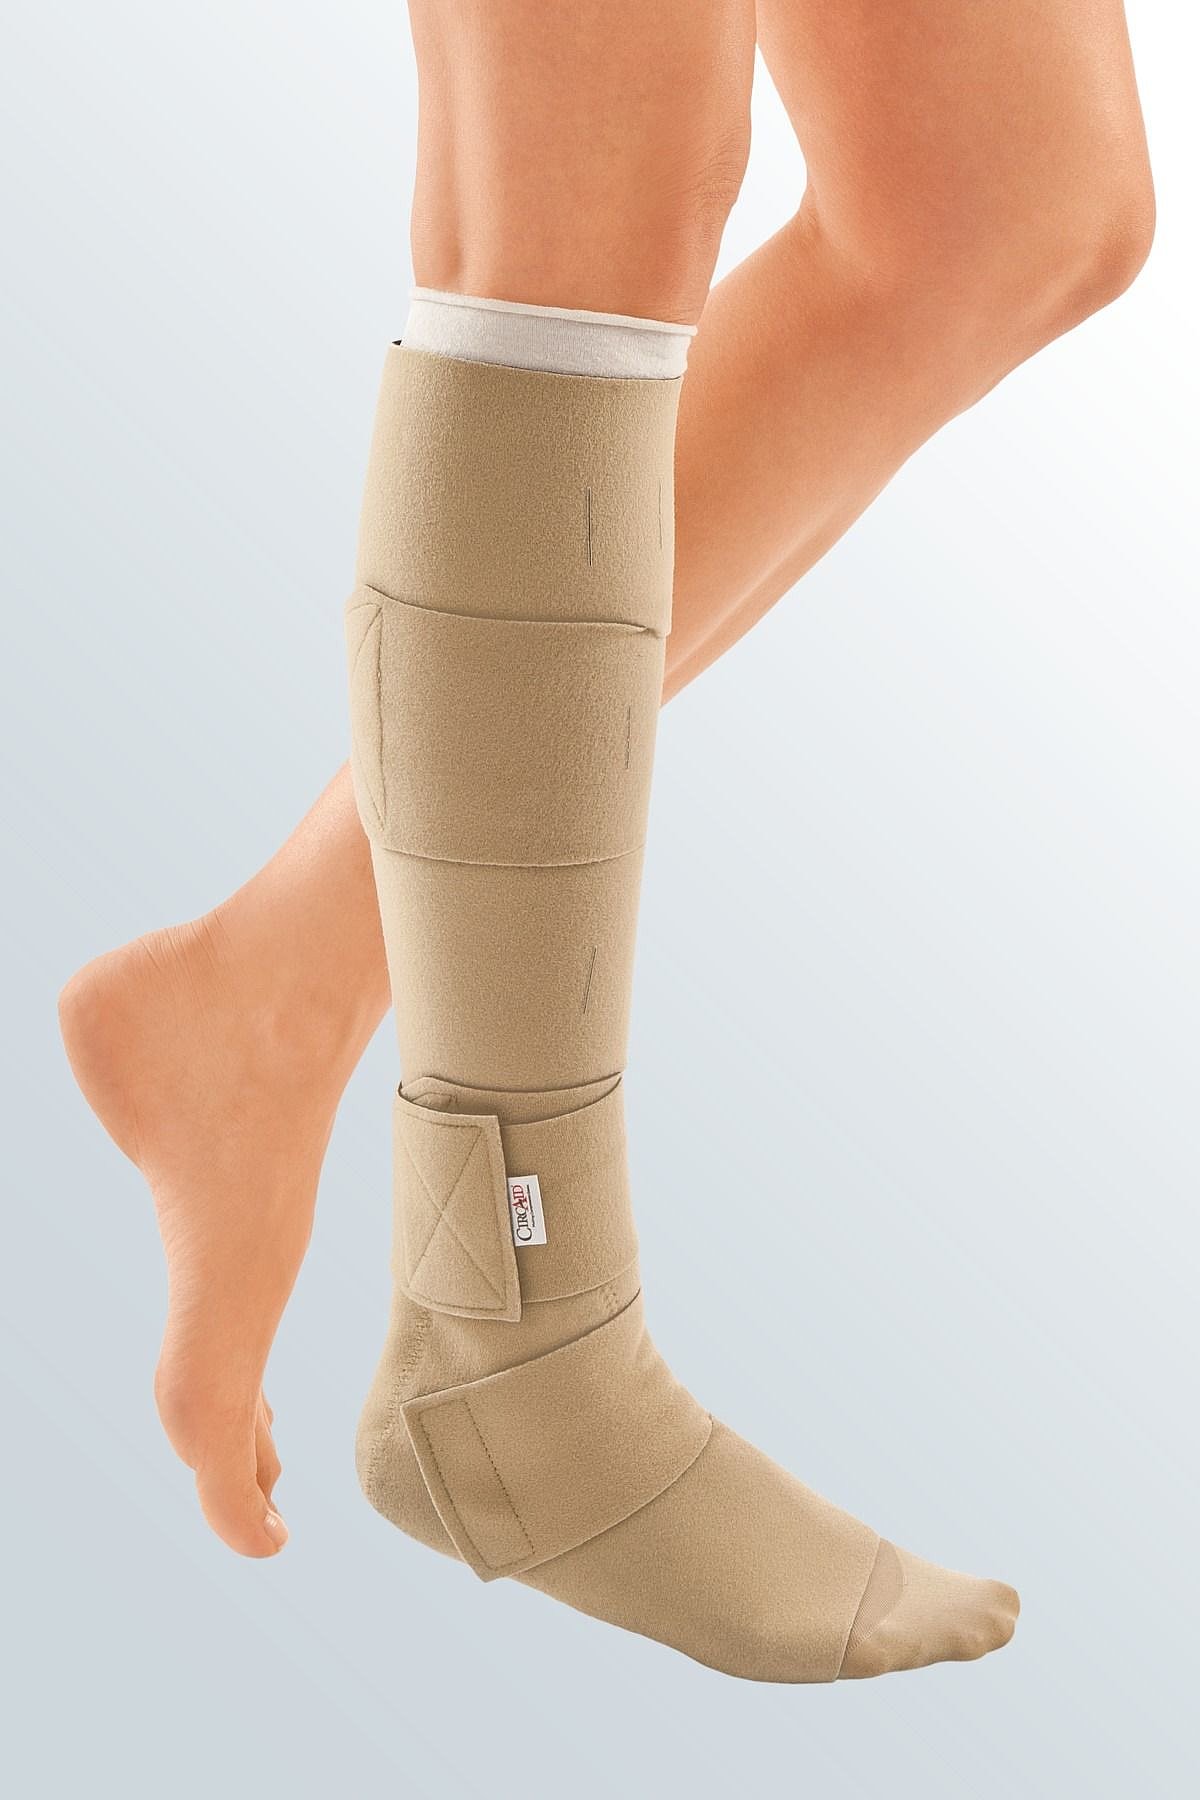 lower leg compression wrap